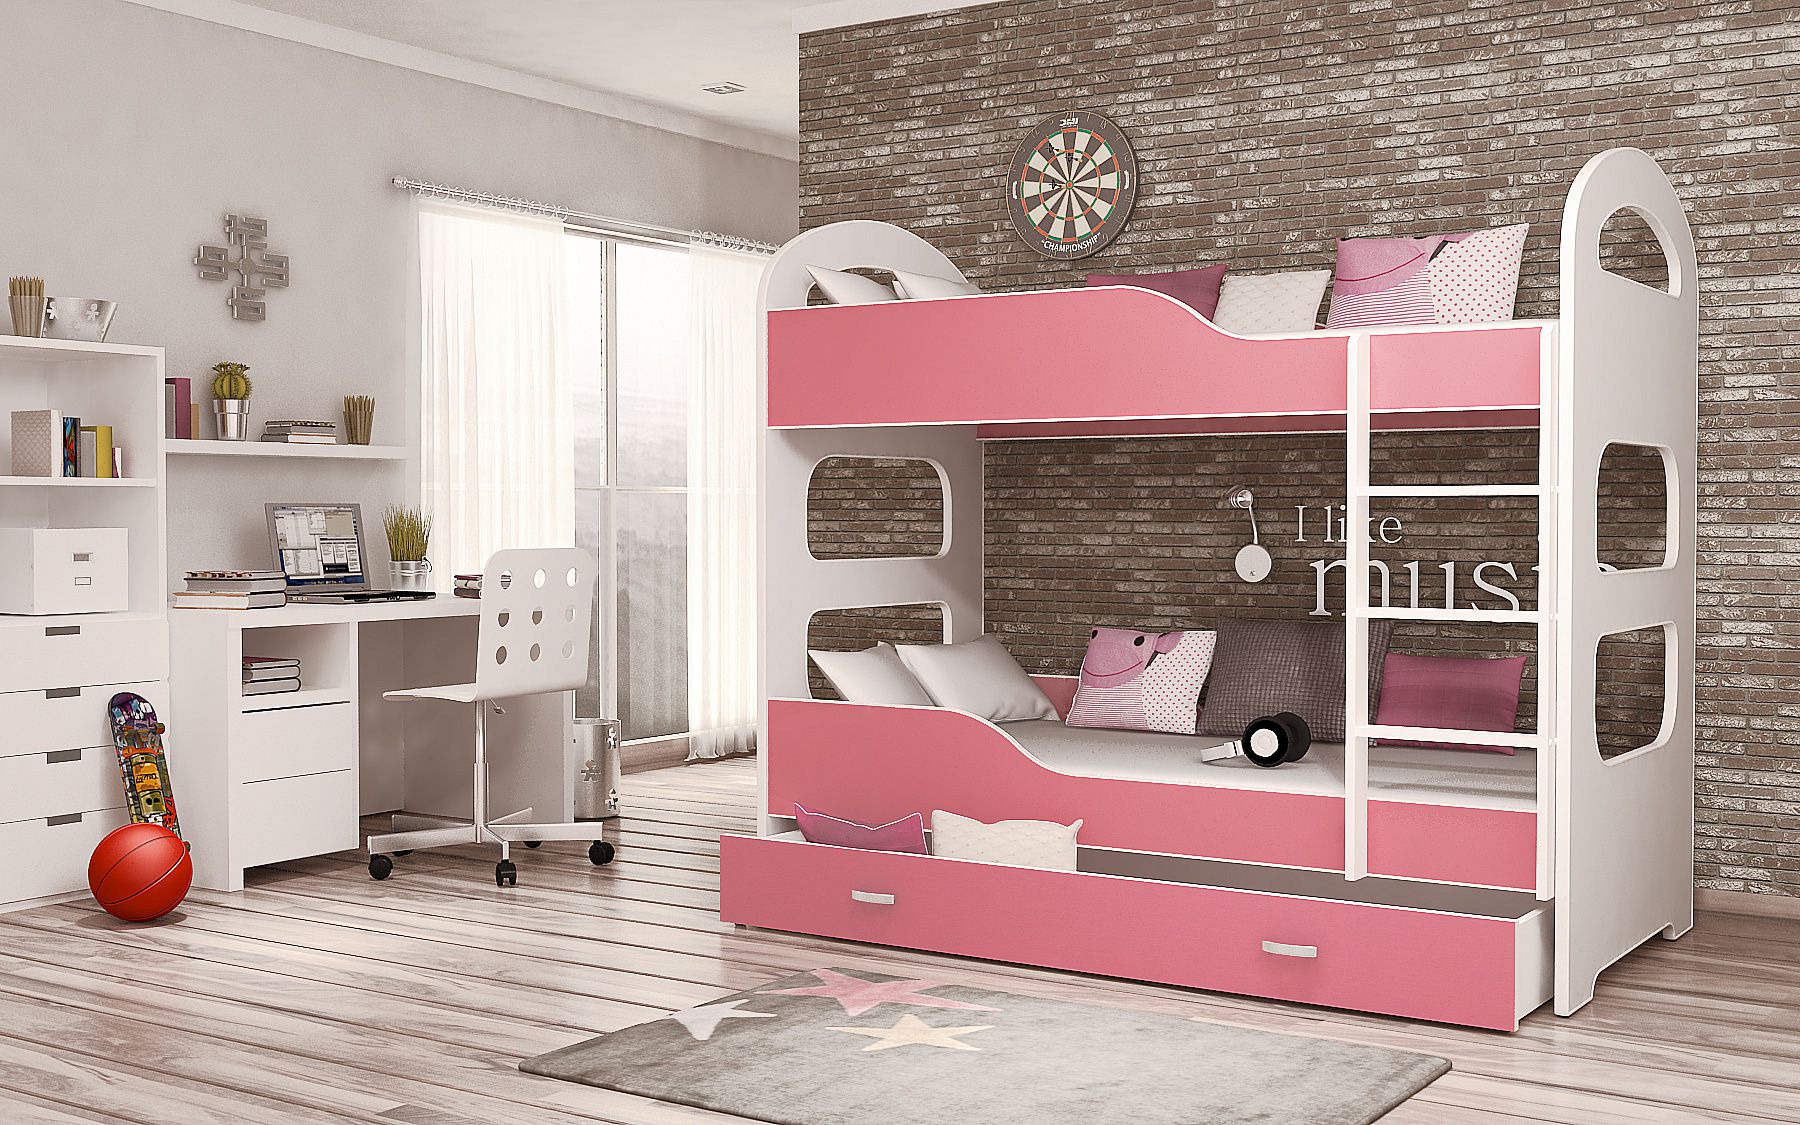 Dětská patrová postel PATRIK 2 COLOR + matrace + rošt ZDARMA, 160x80, bílý/růžový - Expedo s.r.o.